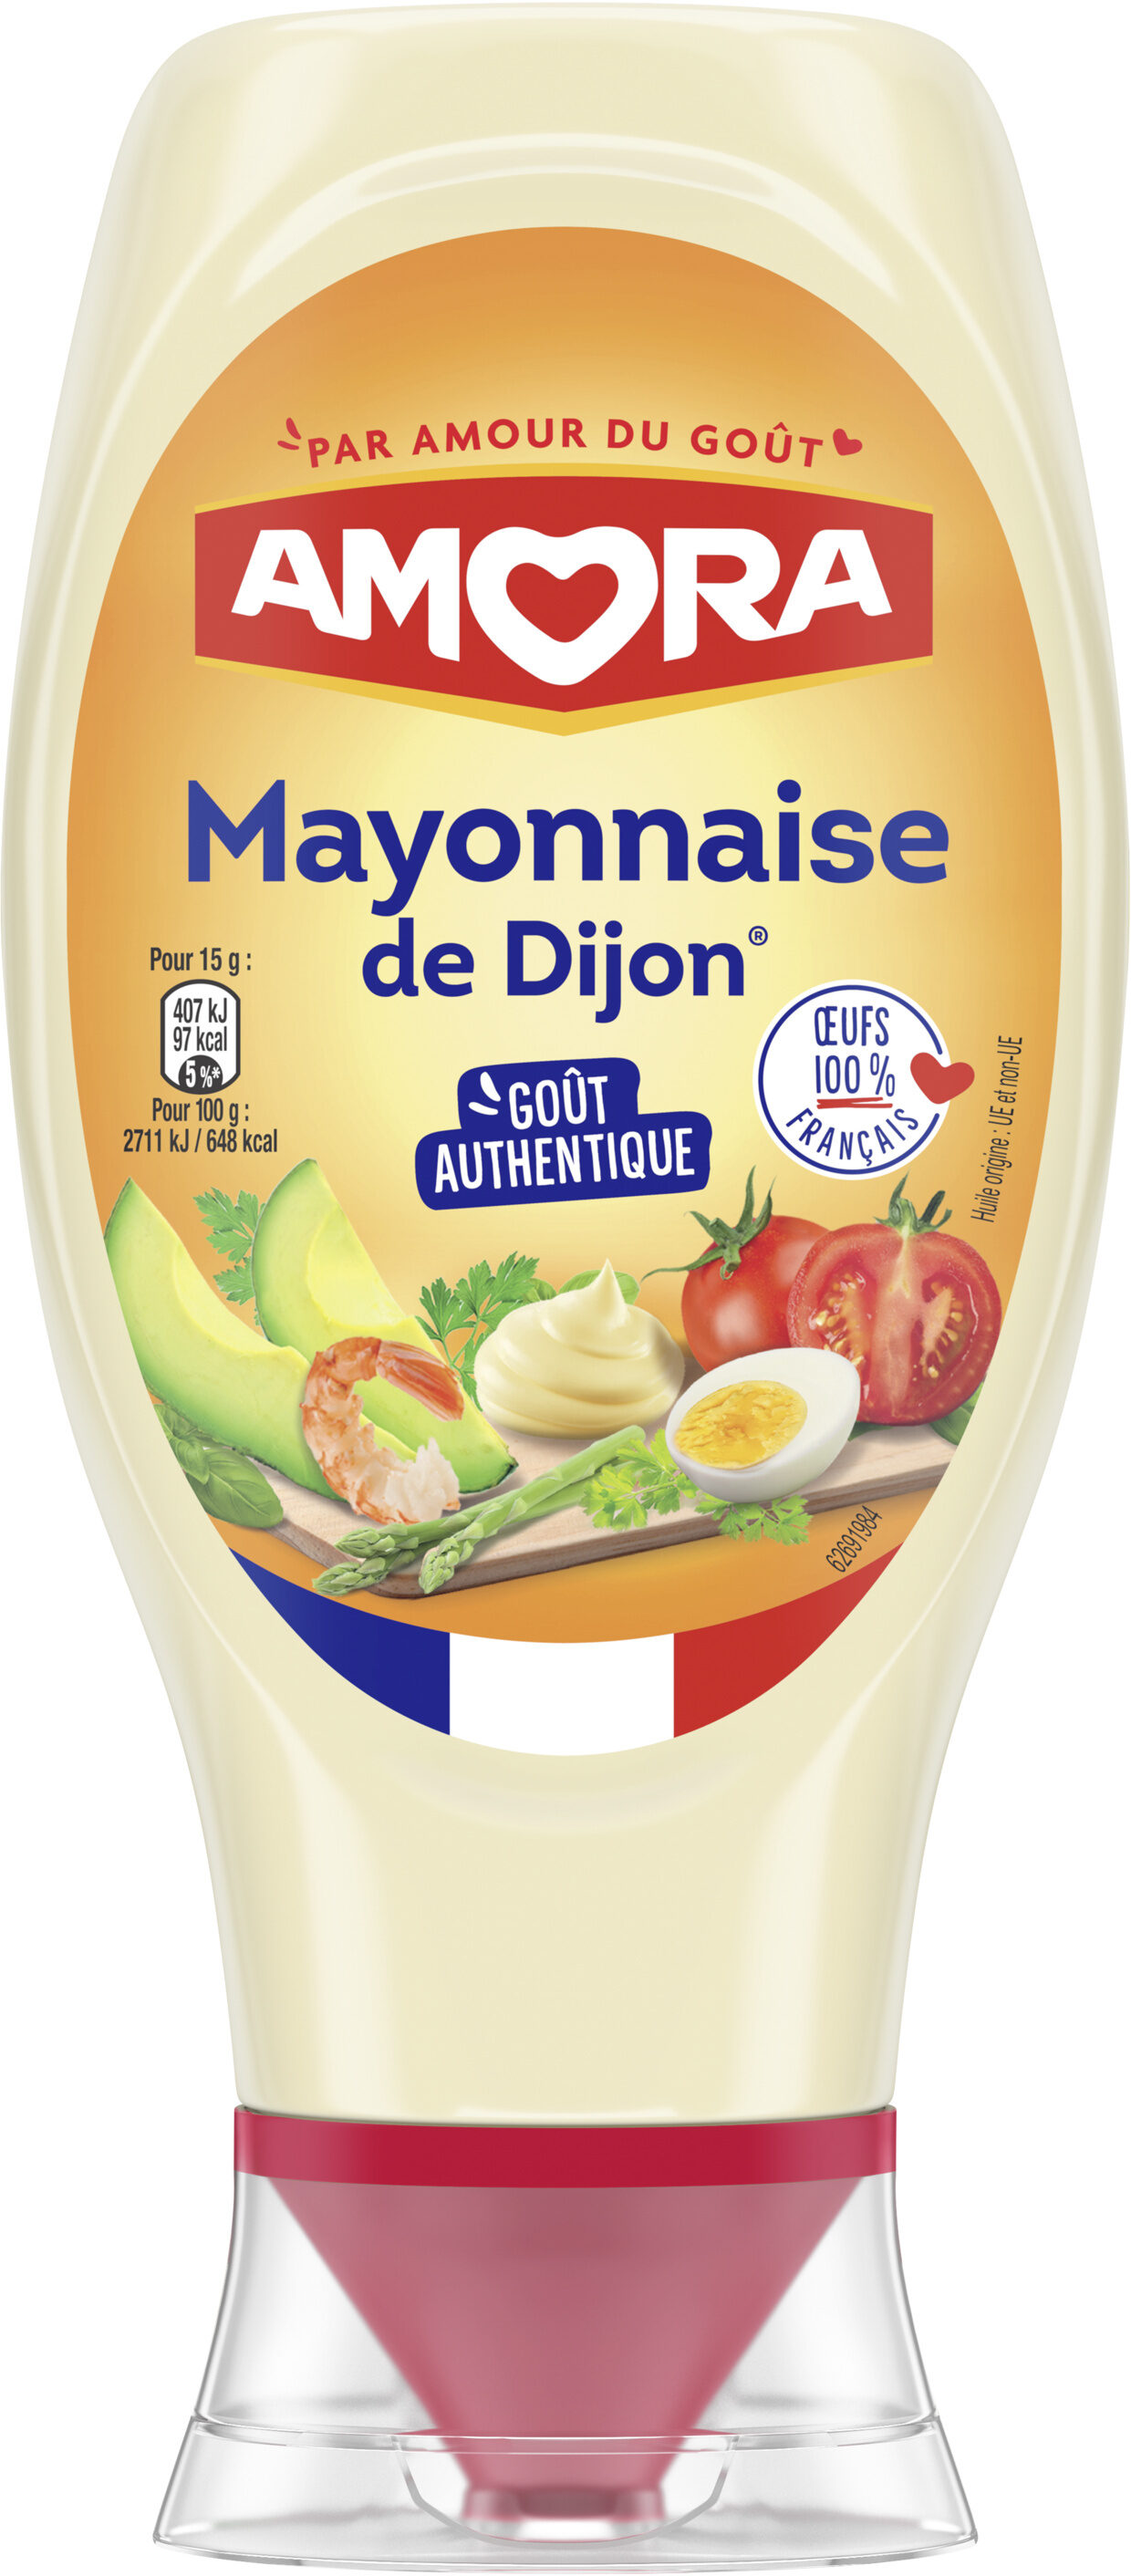 Amora grand mayonn 415g - Produkt - fr